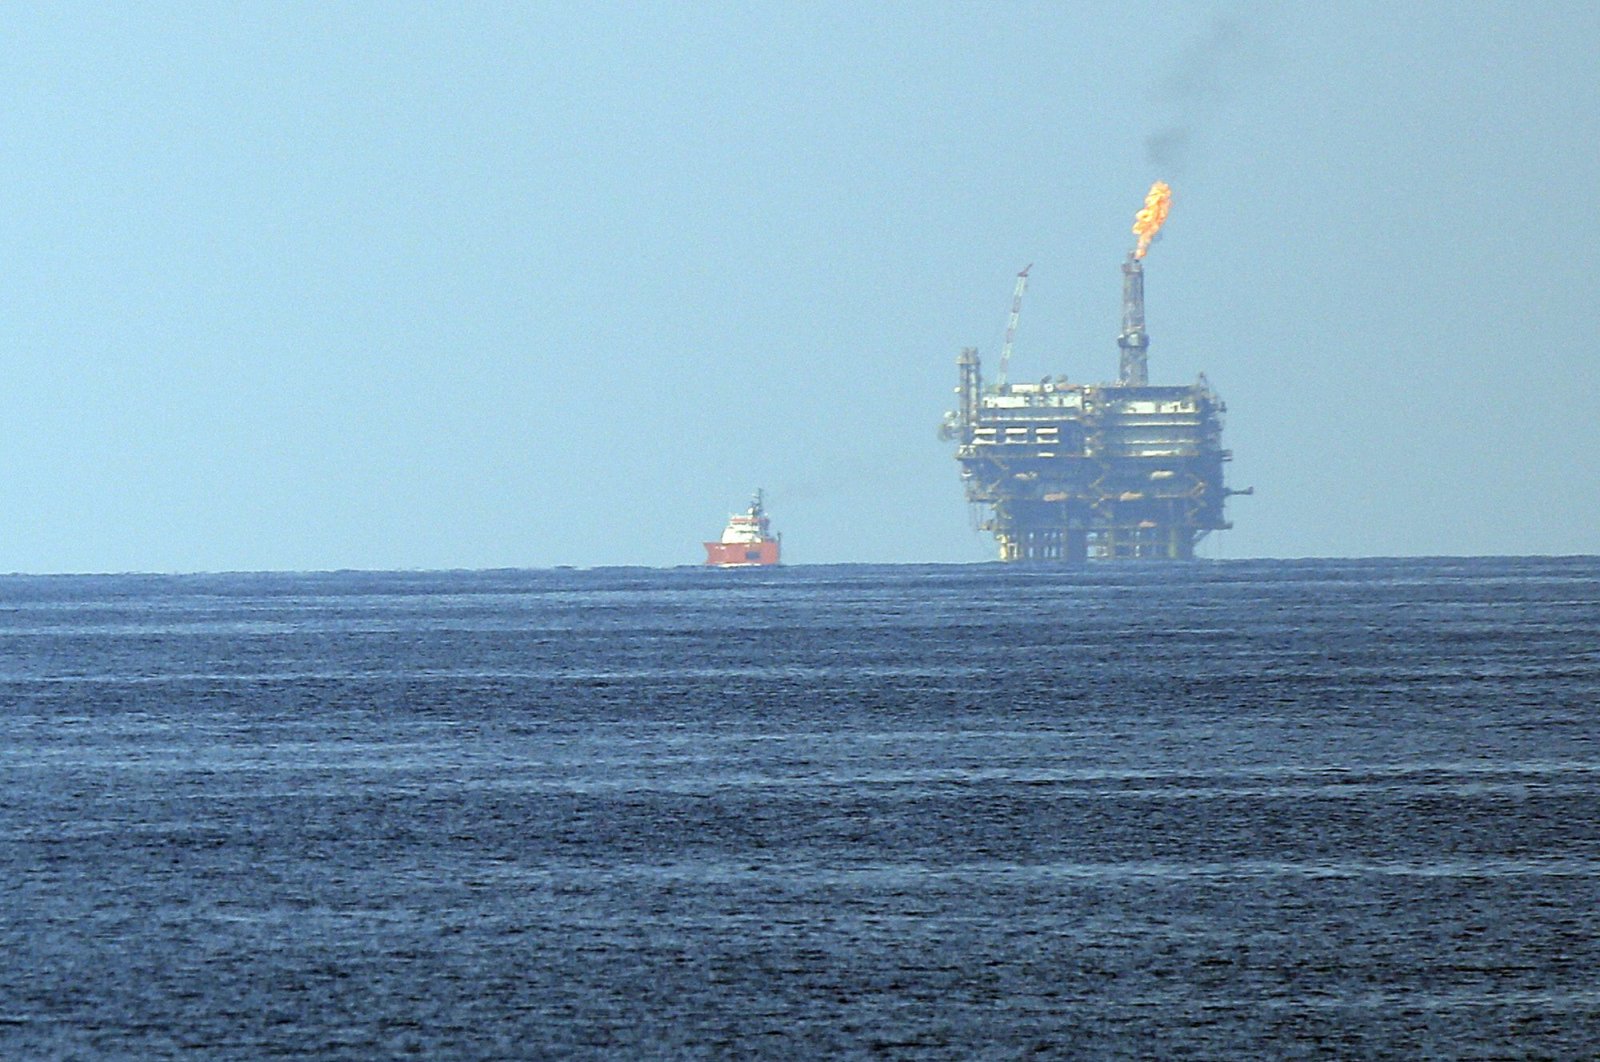 Eni's Bouri Offshore oil terminal is seen off the Libyan coast, in the Mediterranean Sea, Aug. 1, 2015. (AP Photo)